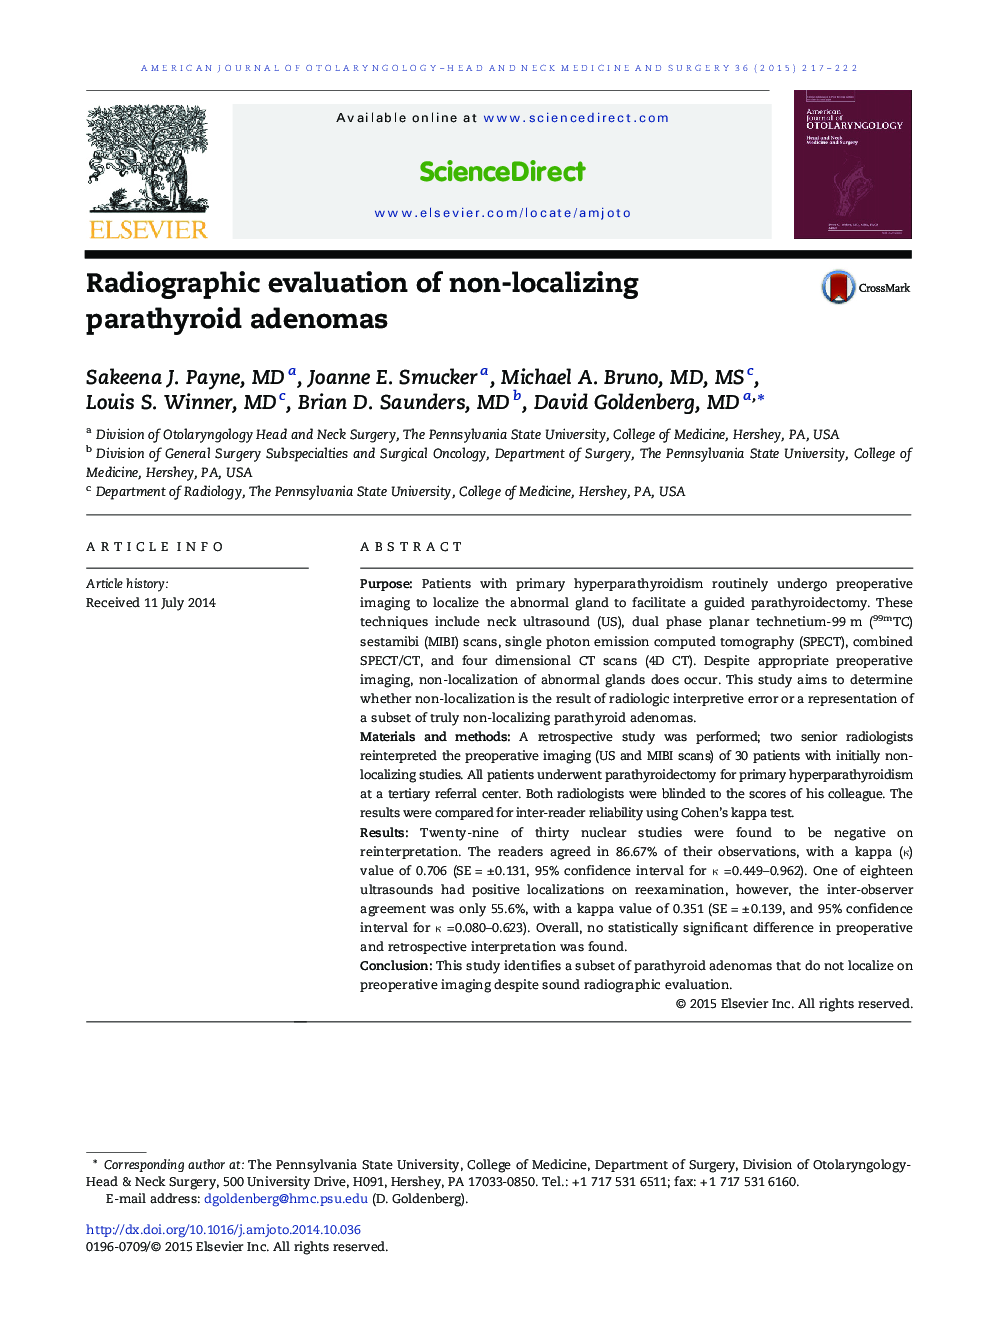 Radiographic evaluation of non-localizing parathyroid adenomas